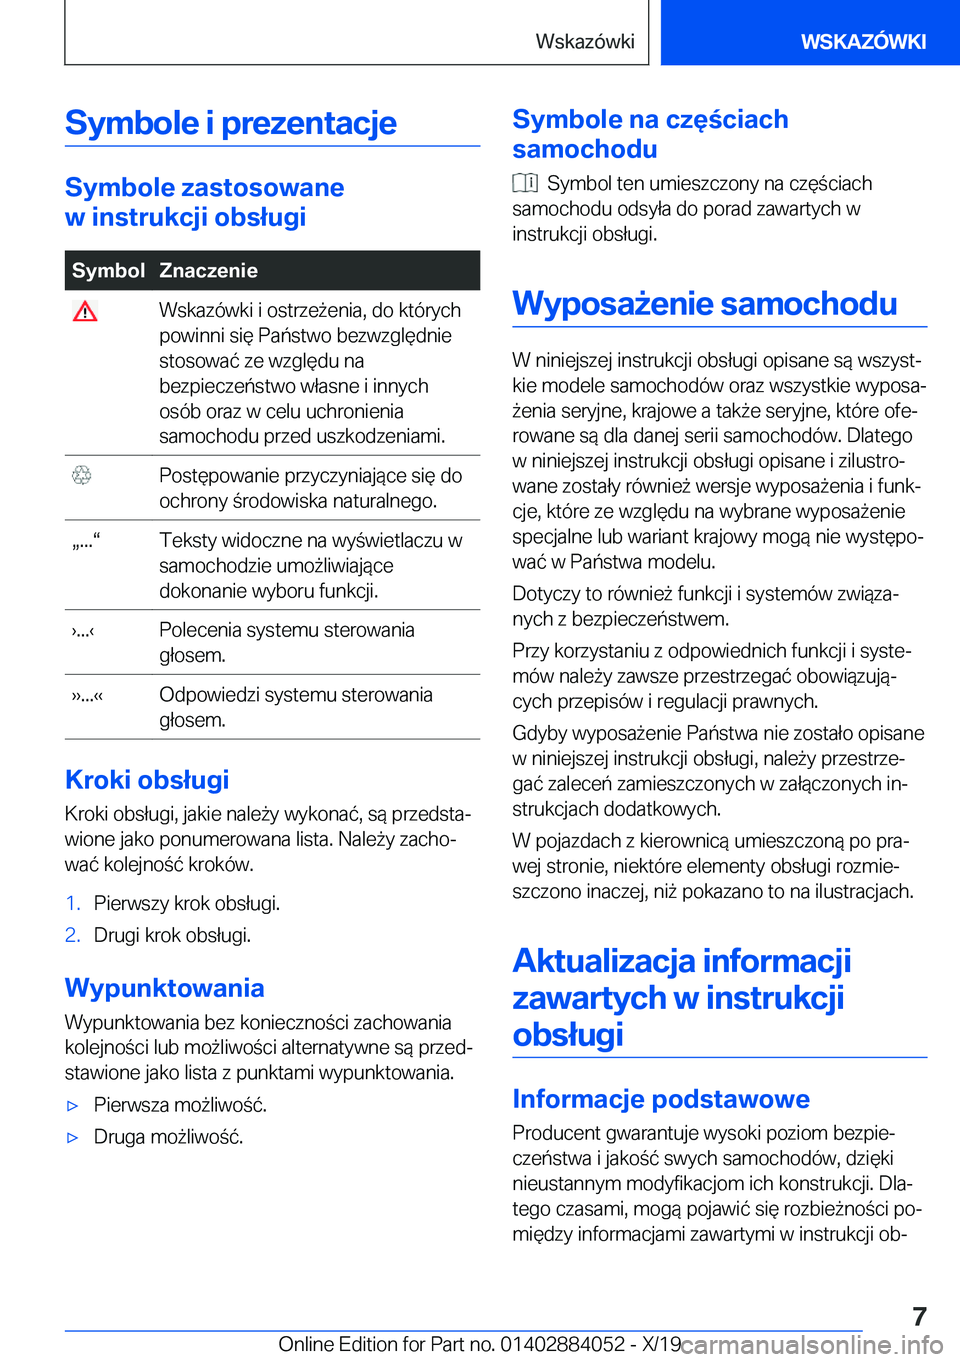 BMW 7 SERIES 2020  Instrukcja obsługi (in Polish) �S�y�m�b�o�l�e��i��p�r�e�z�e�n�t�a�c�j�e
�S�y�m�b�o�l�e��z�a�s�t�o�s�o�w�a�n�e
�w��i�n�s�t�r�u�k�c�j�i��o�b�s�ł�u�g�i
�S�y�m�b�o�l�Z�n�a�c�z�e�n�i�e��W�s�k�a�z�